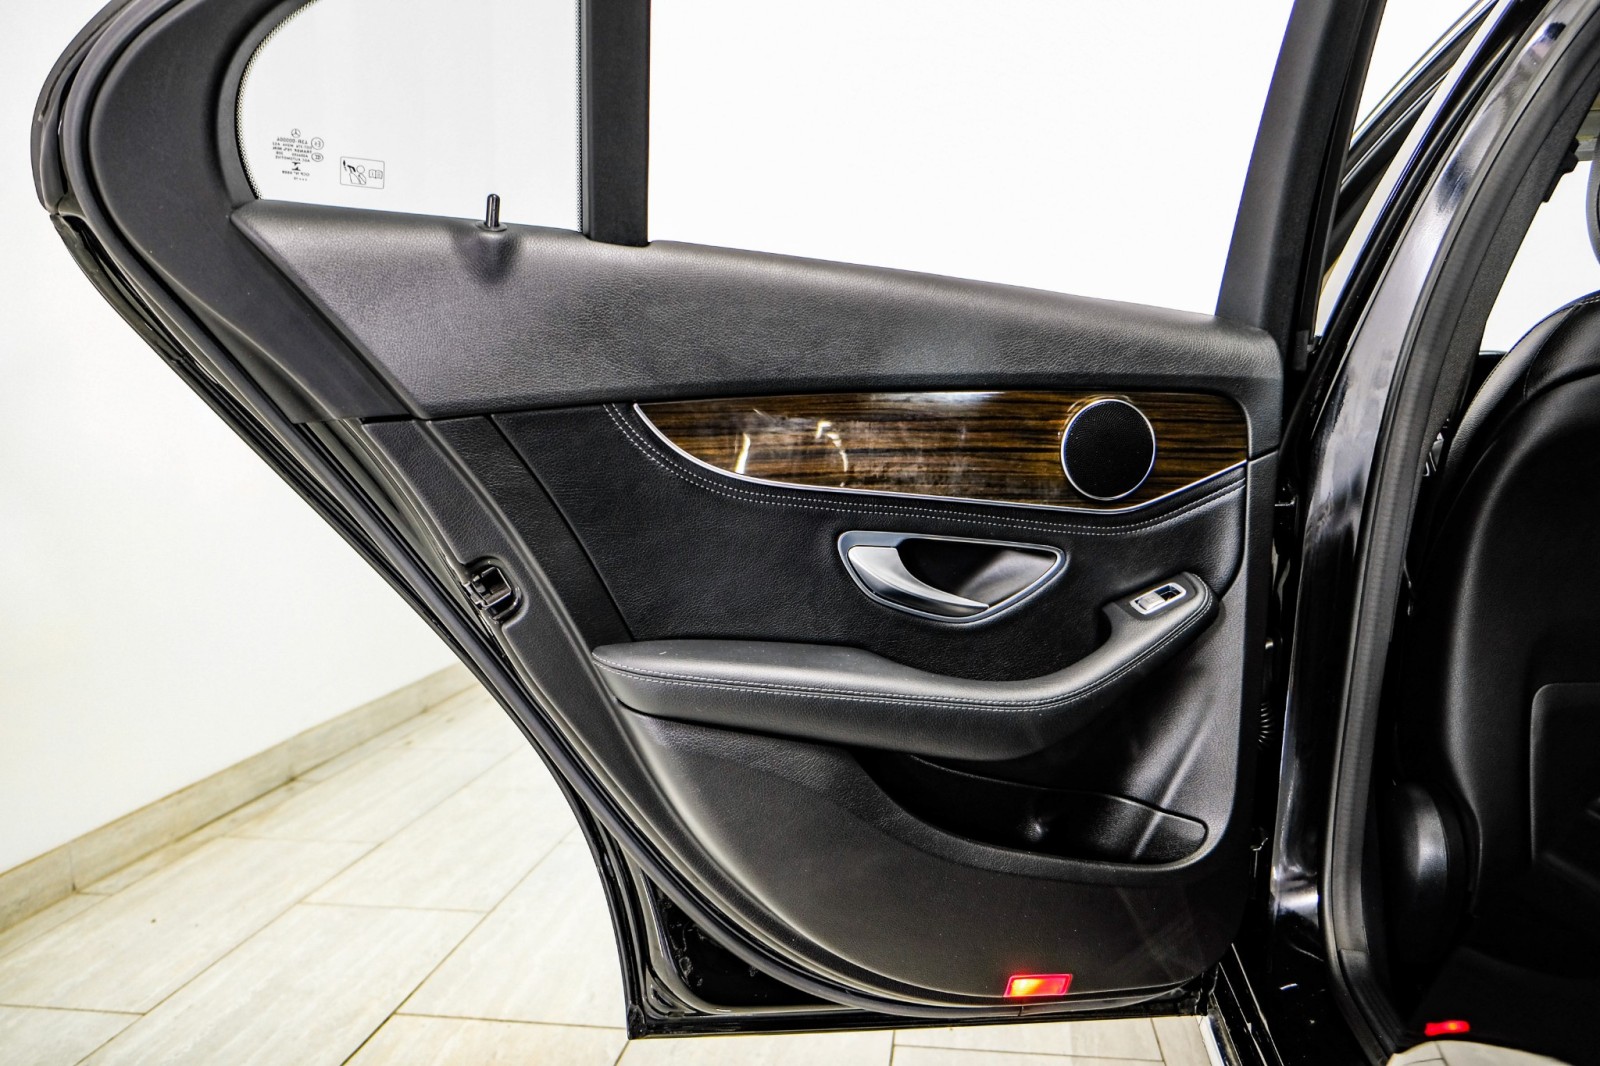 2015 Mercedes-Benz C300 SPORT BLIND SPOT ASSIST NAVIGATION LEATHER SEATS R 45